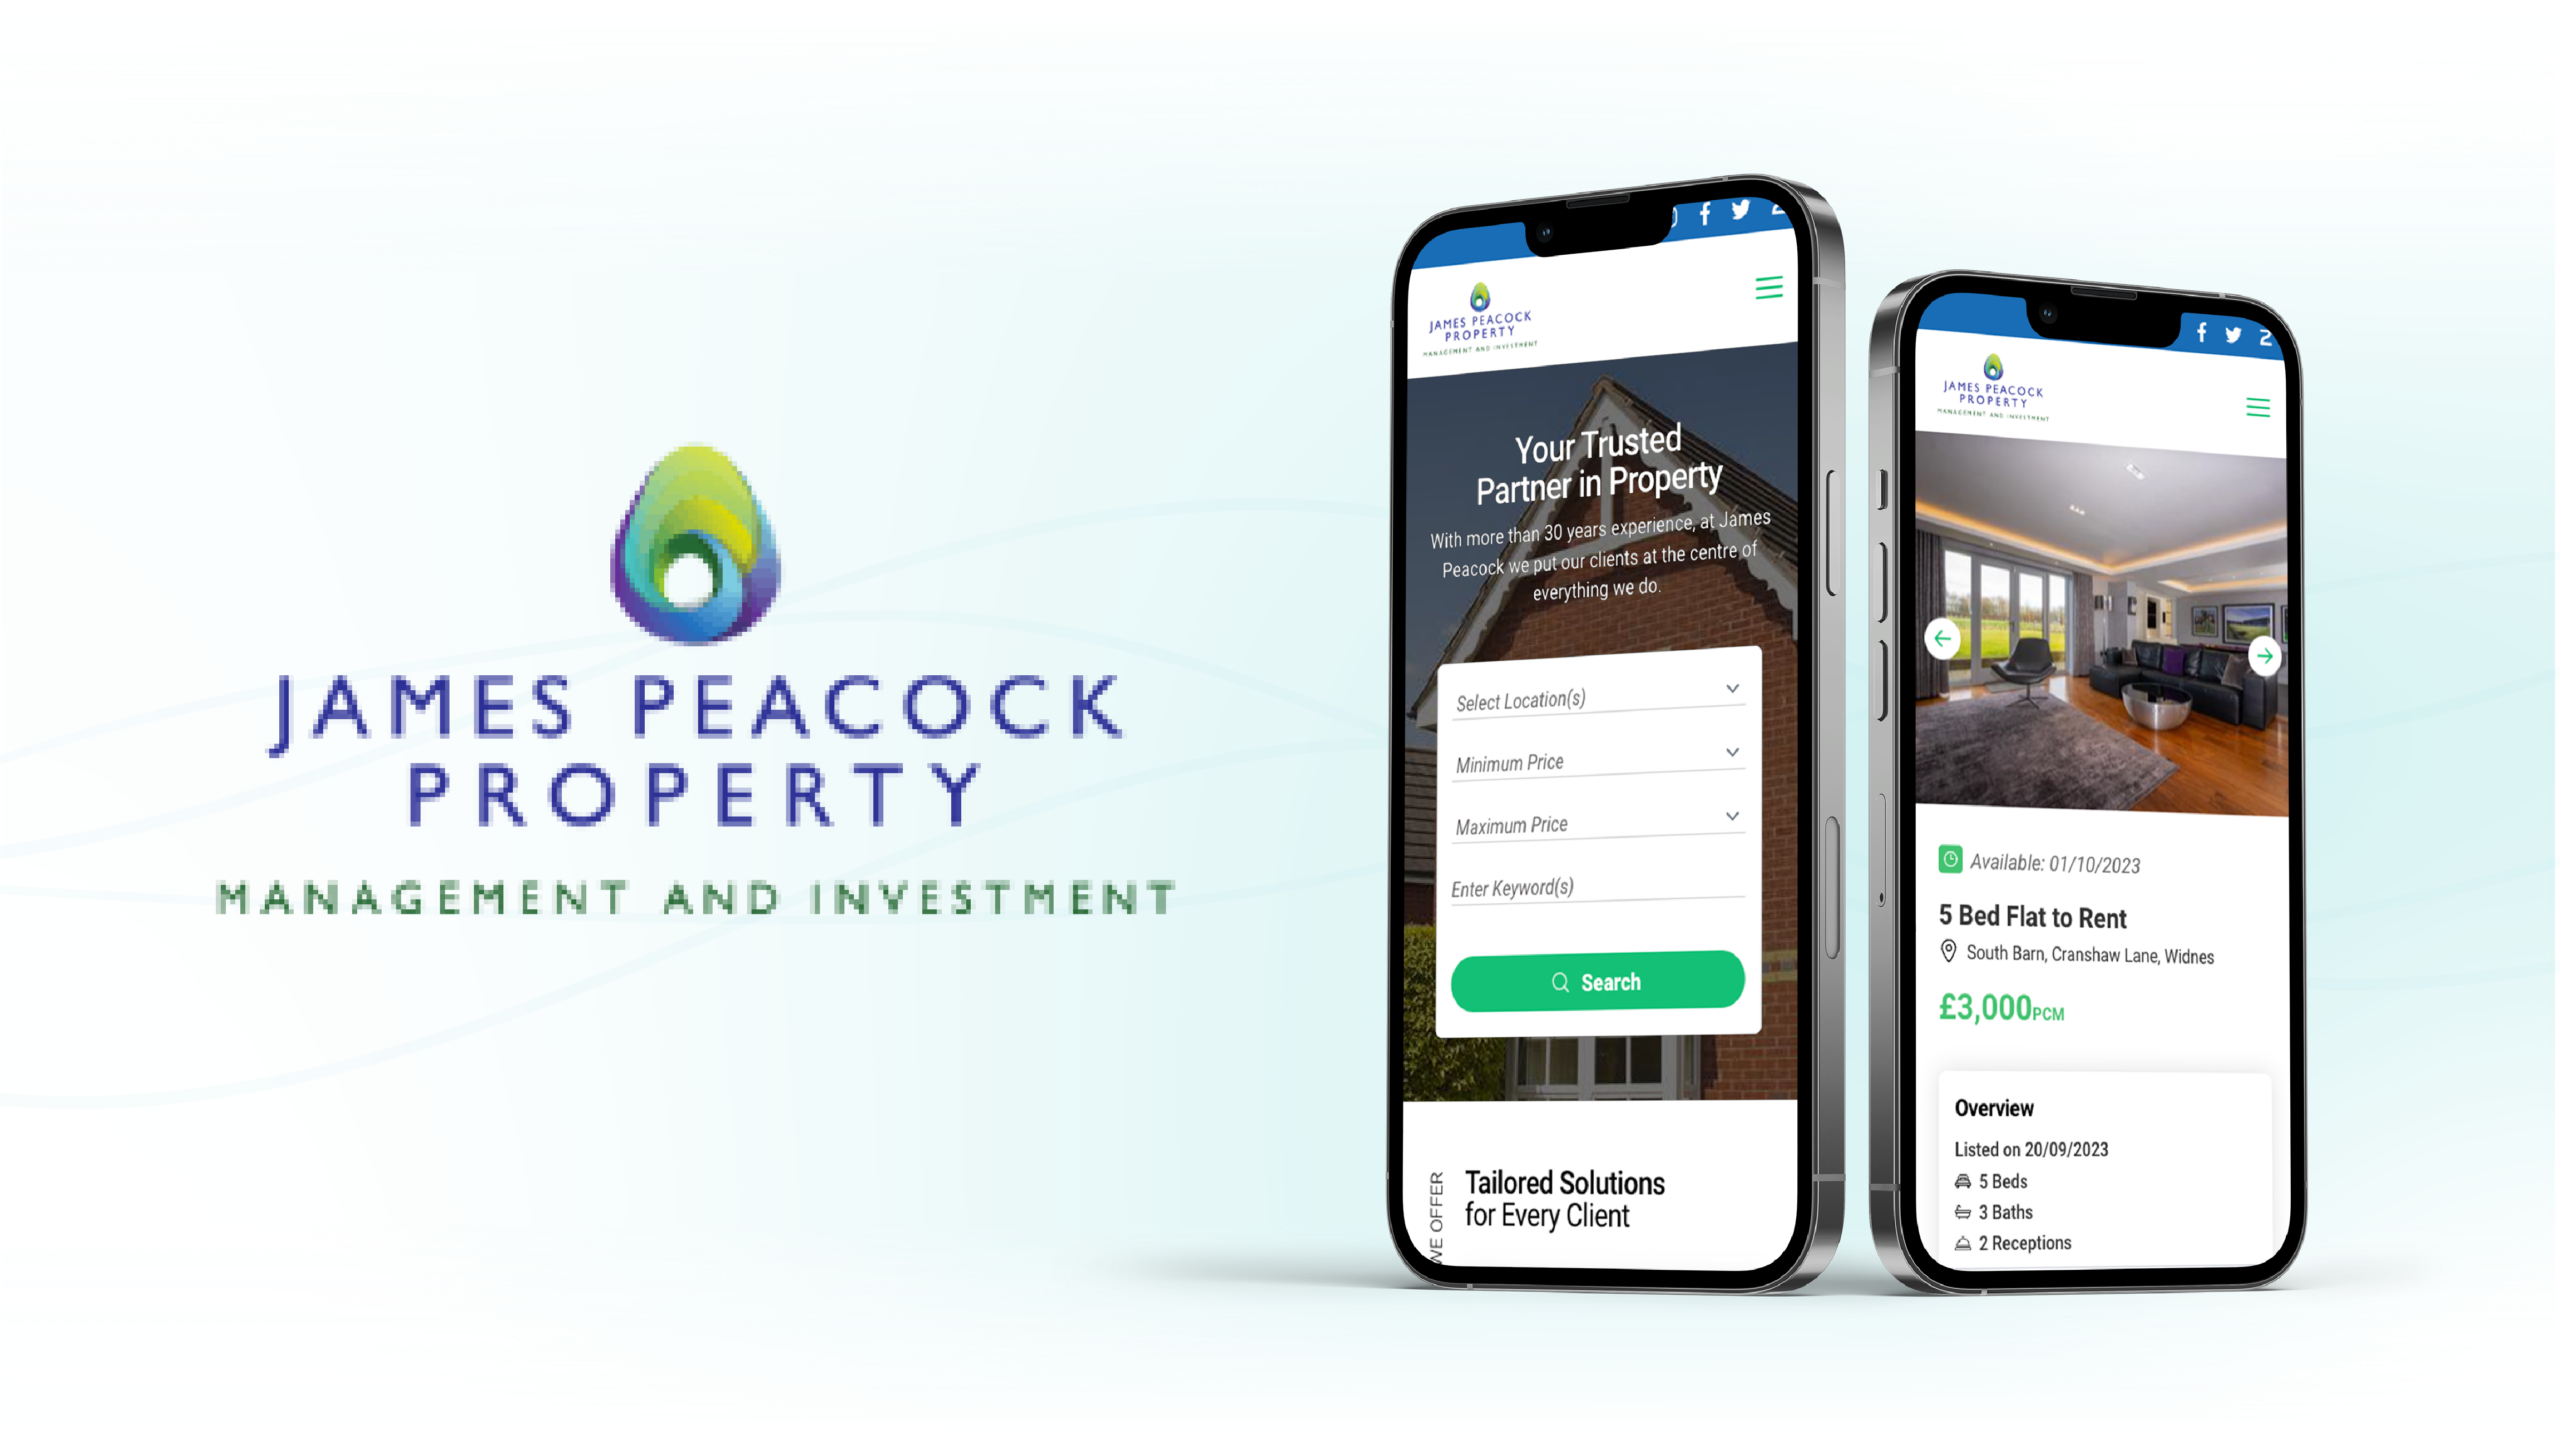 James Peacock Property – Designs